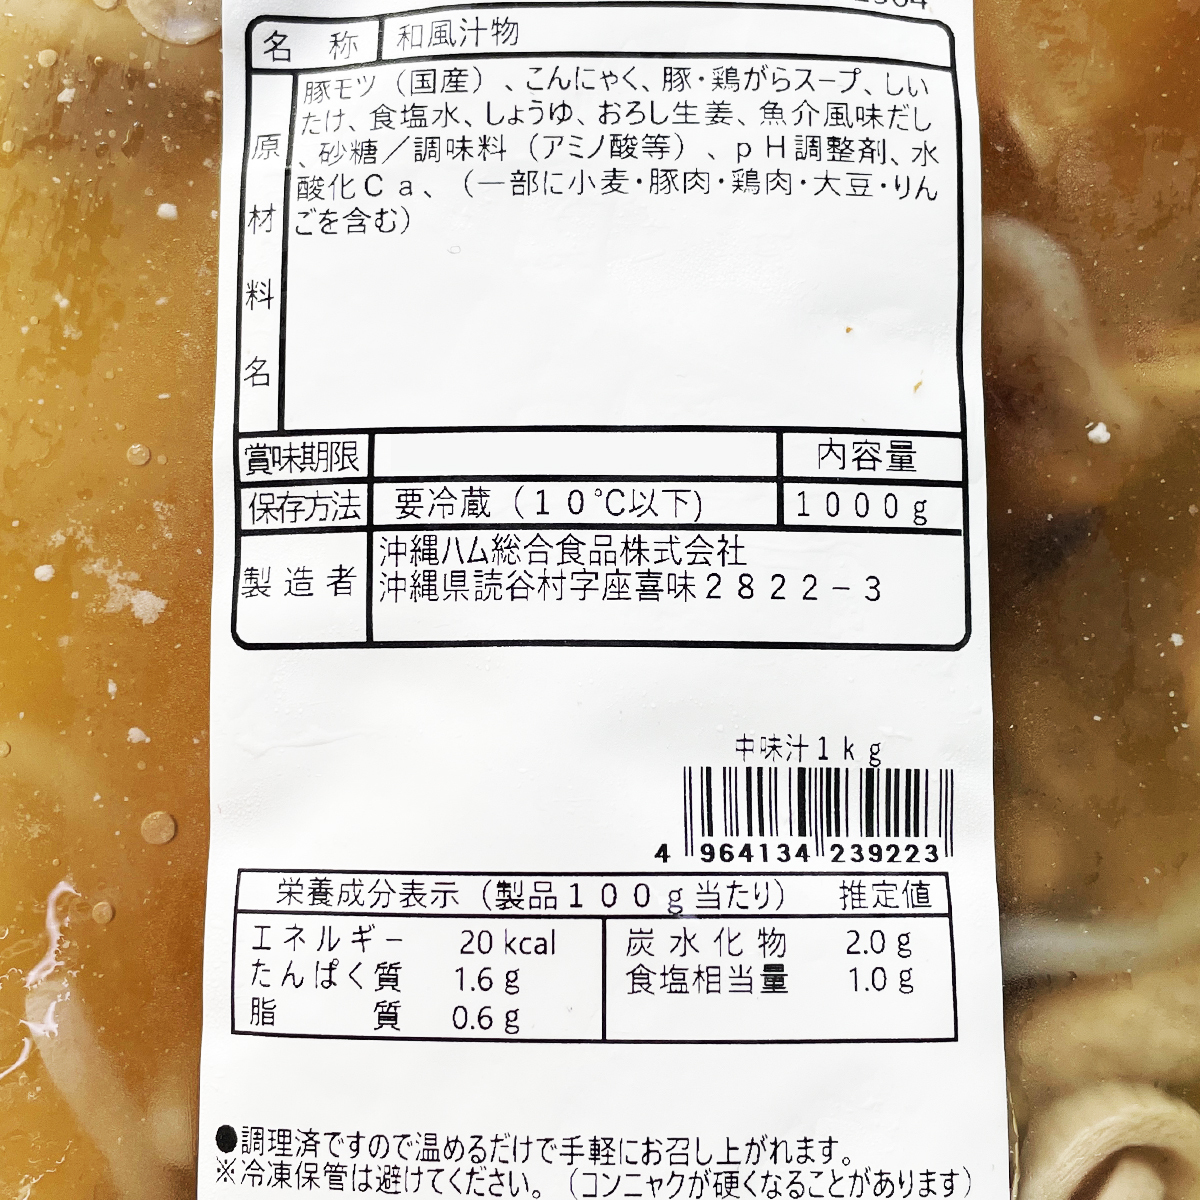  Okinawa . земля производство . лампочка кулинария ваш заказ гурман Okinawa традиция. тест средний тест .1kg рефрижератор 